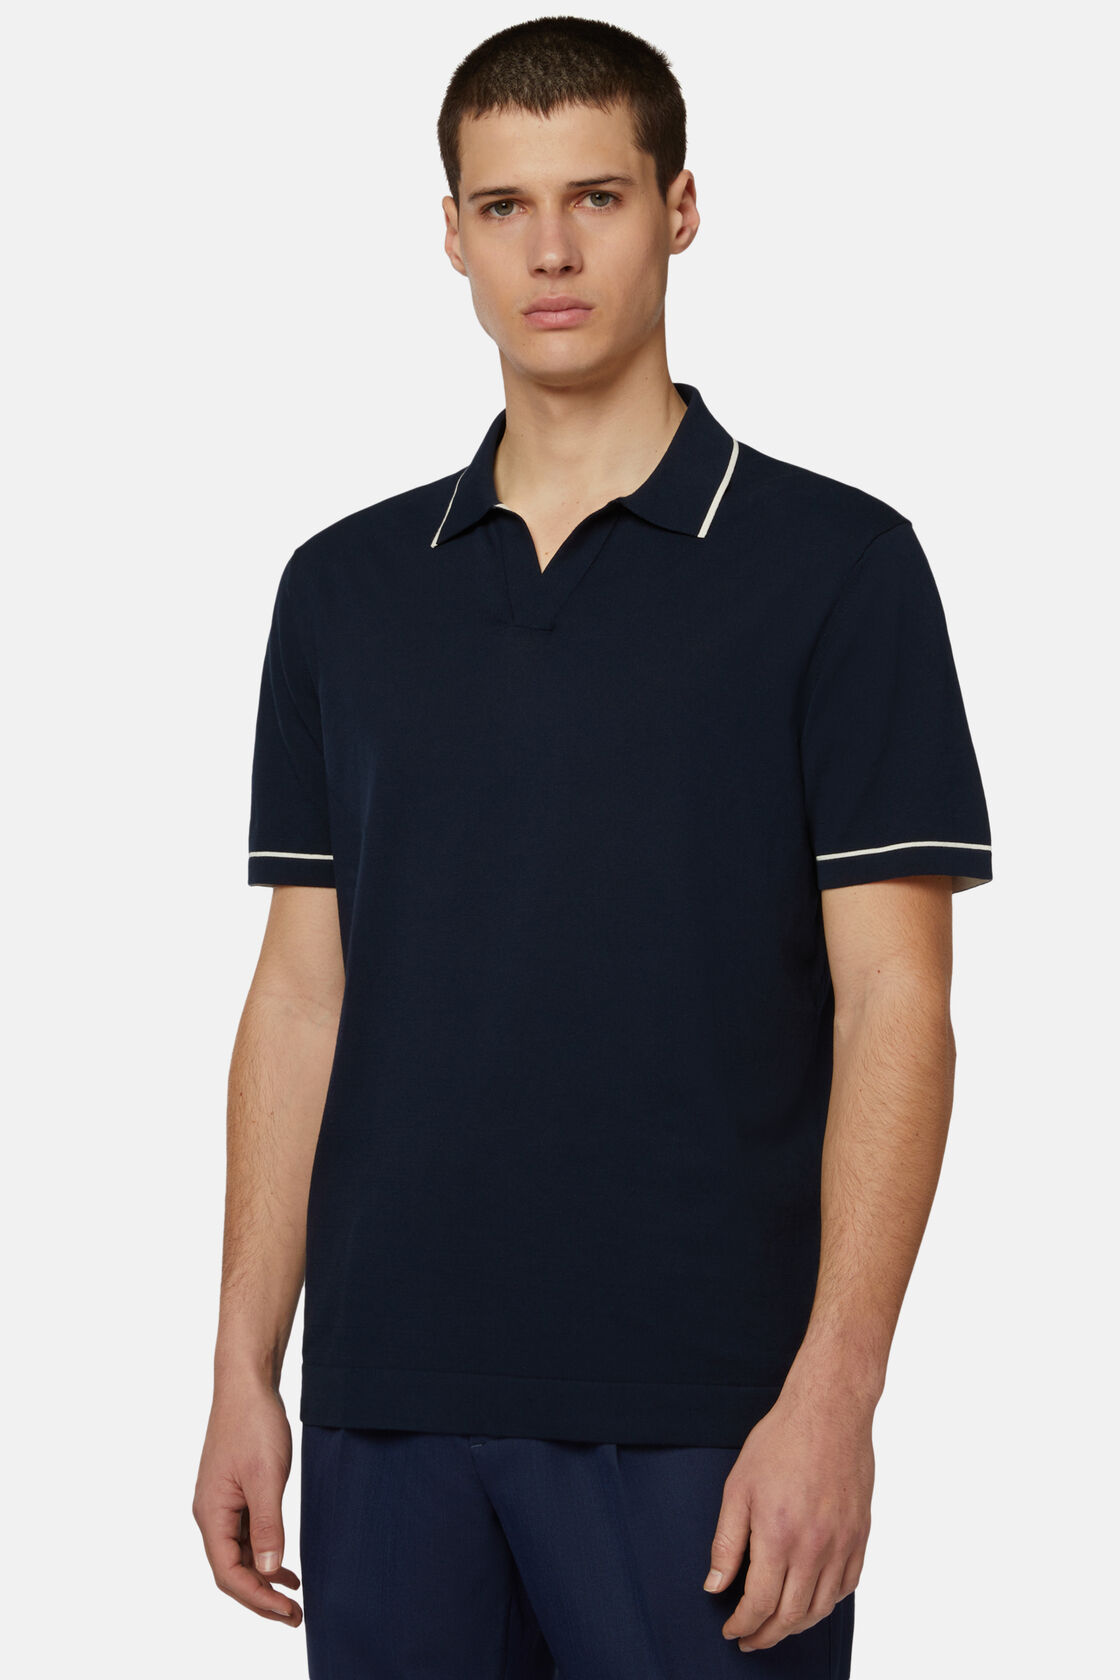 Navy Cotton Crepe Knit Polo Shirt, Navy blue, hi-res